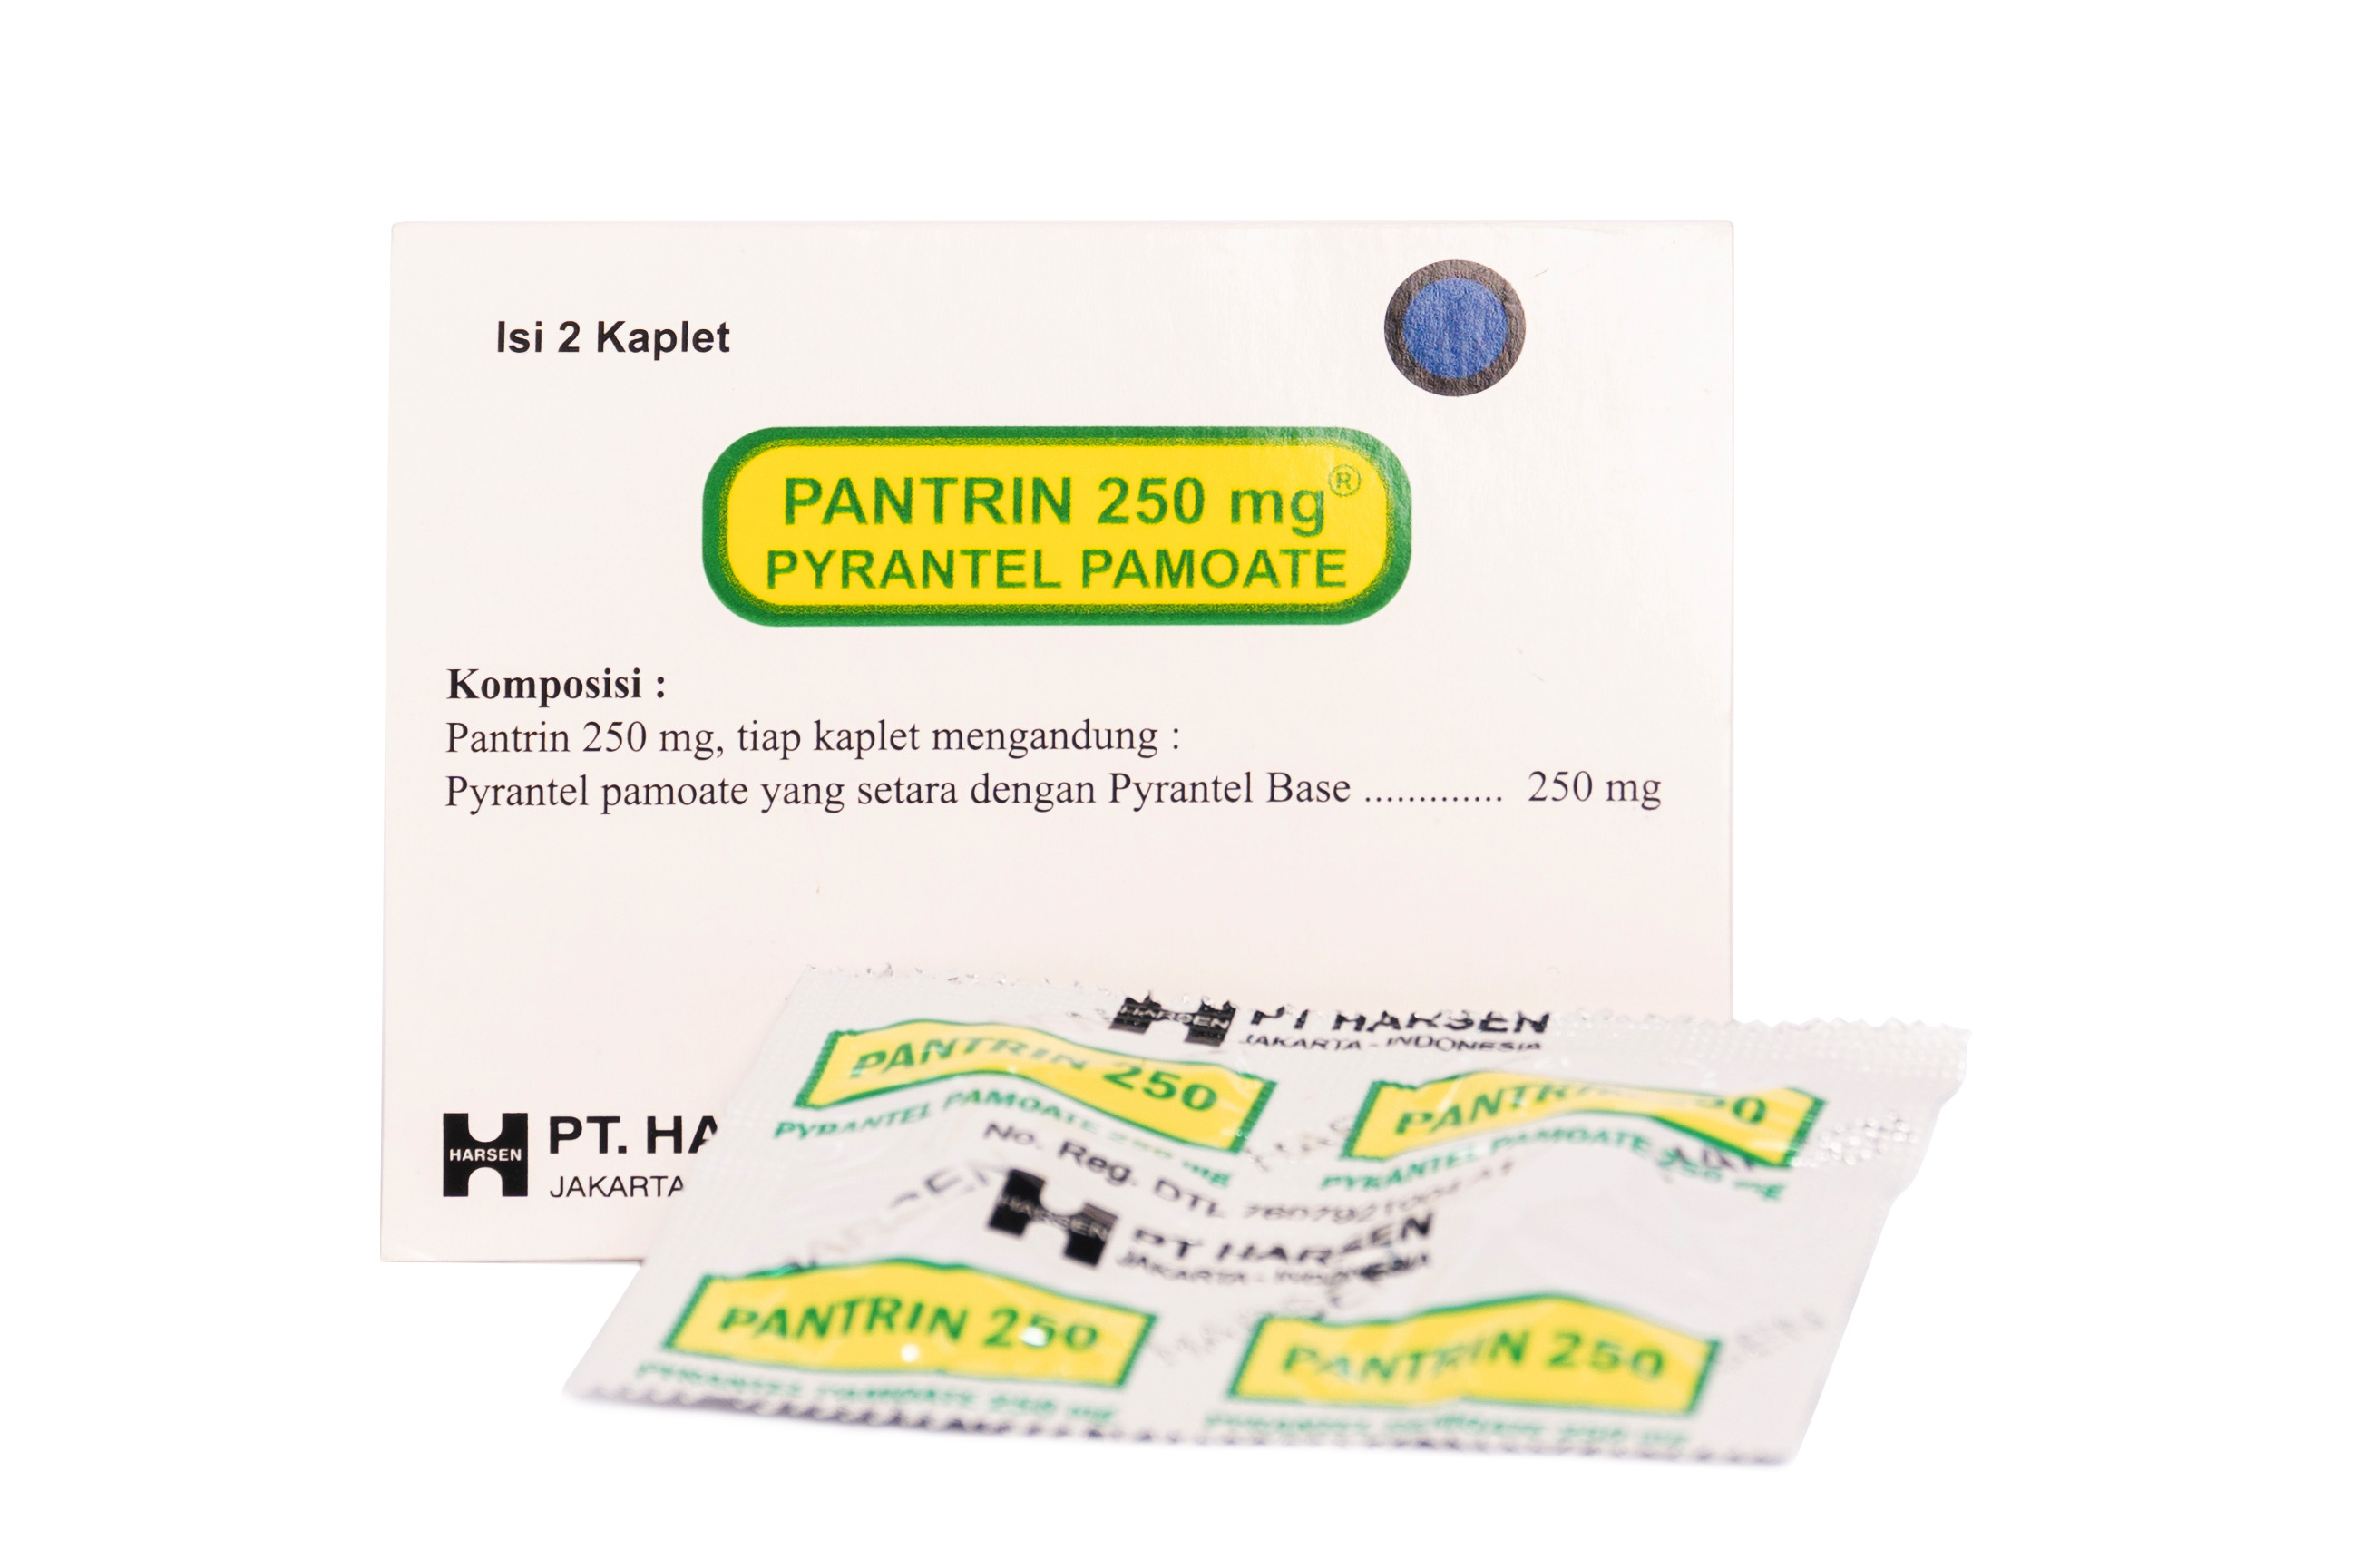 Pantrin 250 mg